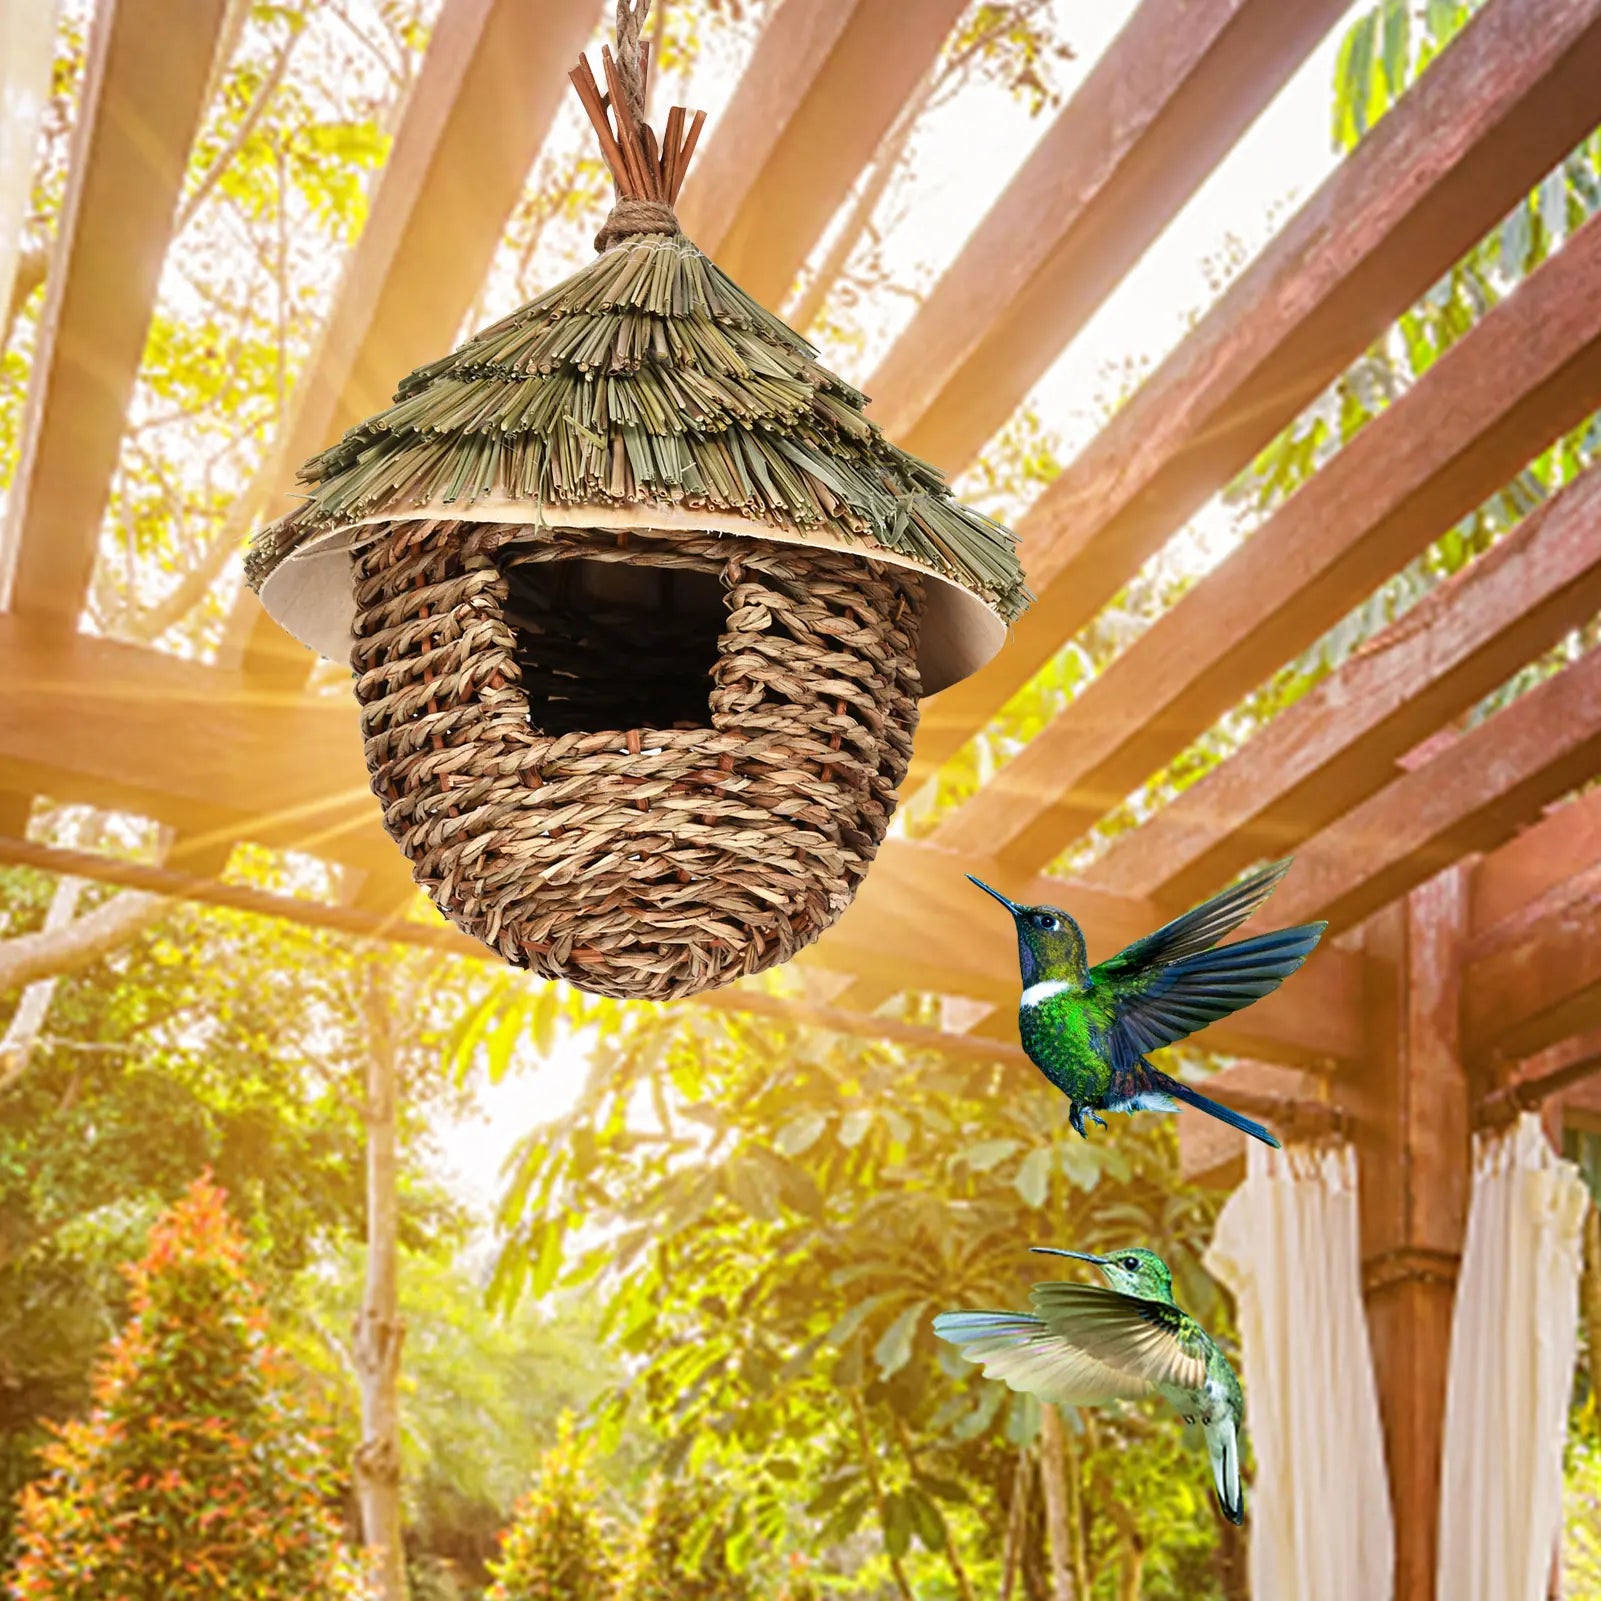 Charming Decorative Hummingbird House Hand-woven Hung Straw Nest Natural Grass Hung Bird For Garden Office Indoor Patio Lawn